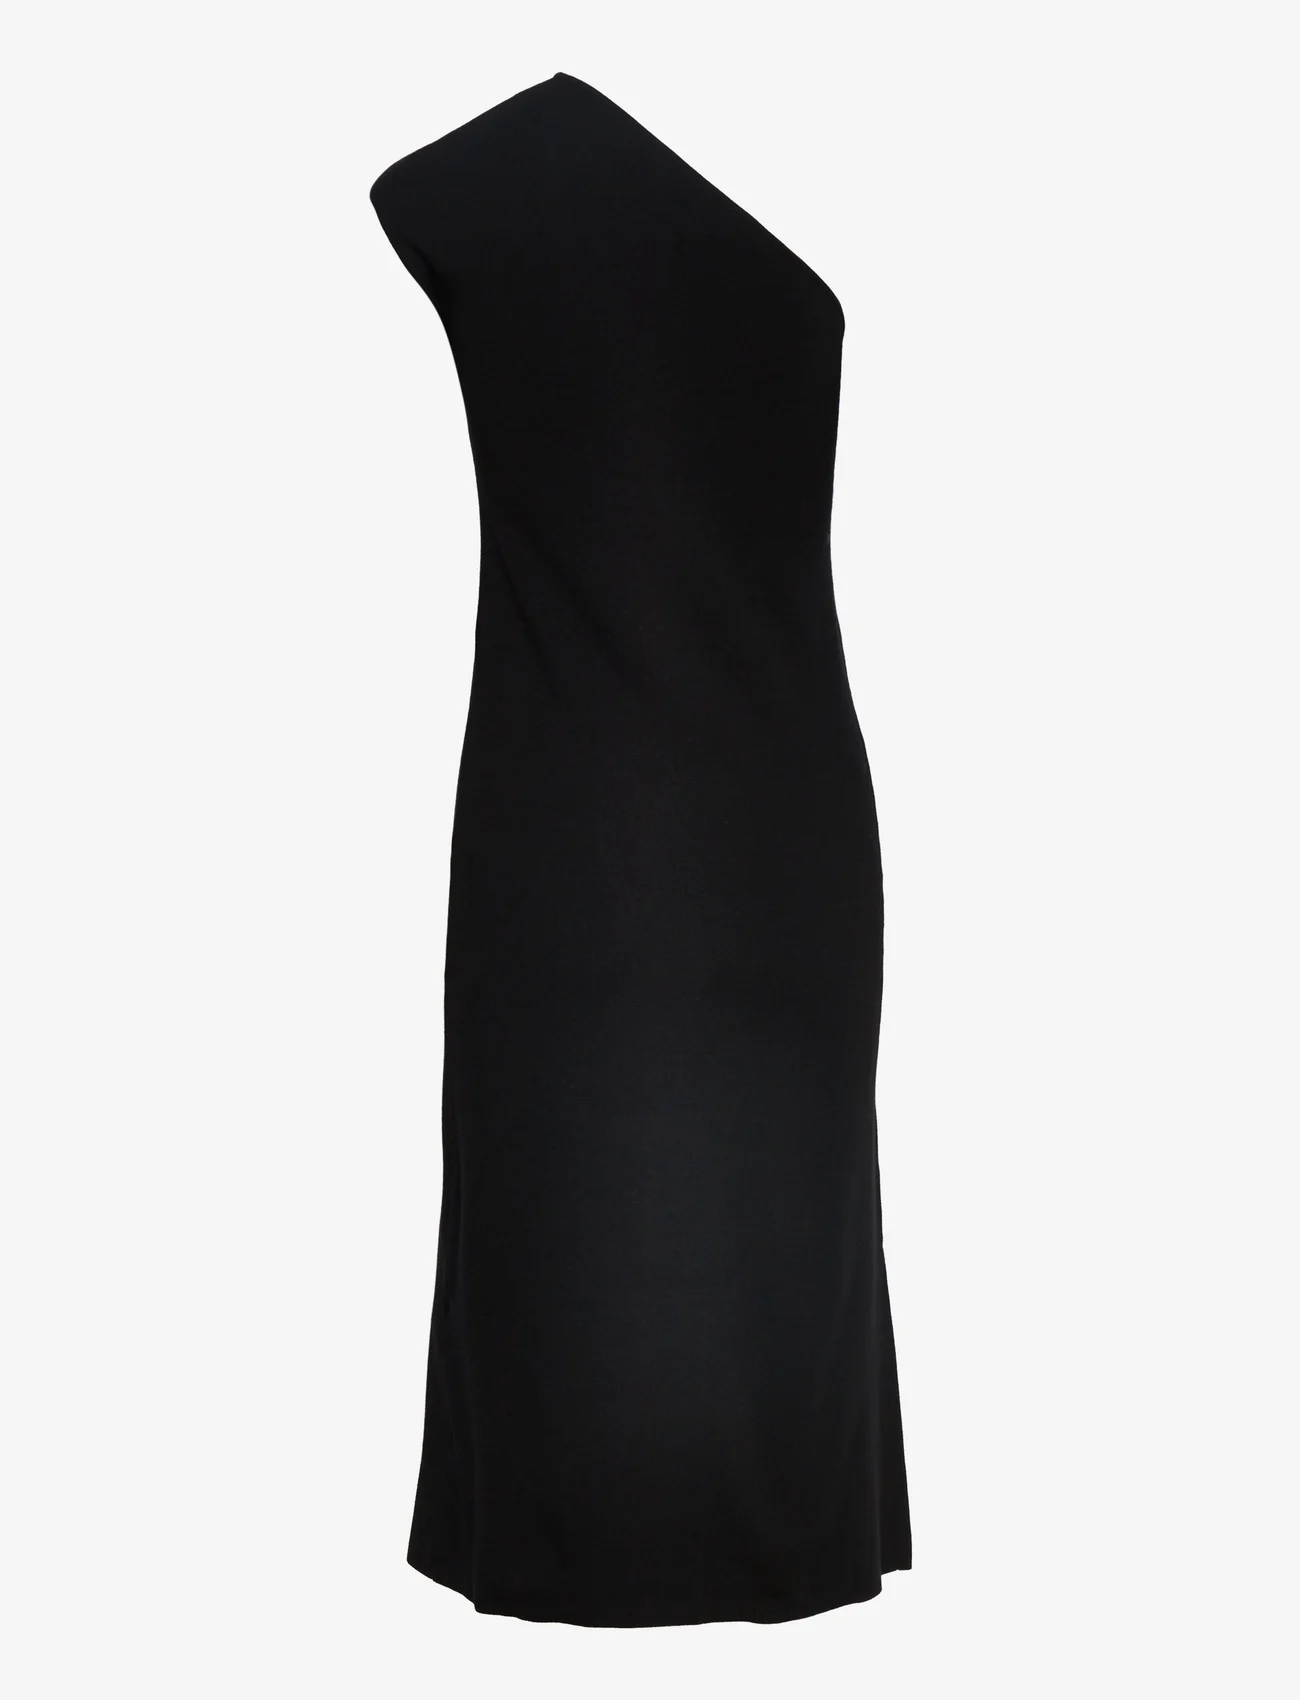 Filippa K - Katia Dress - midiklänningar - black - 1